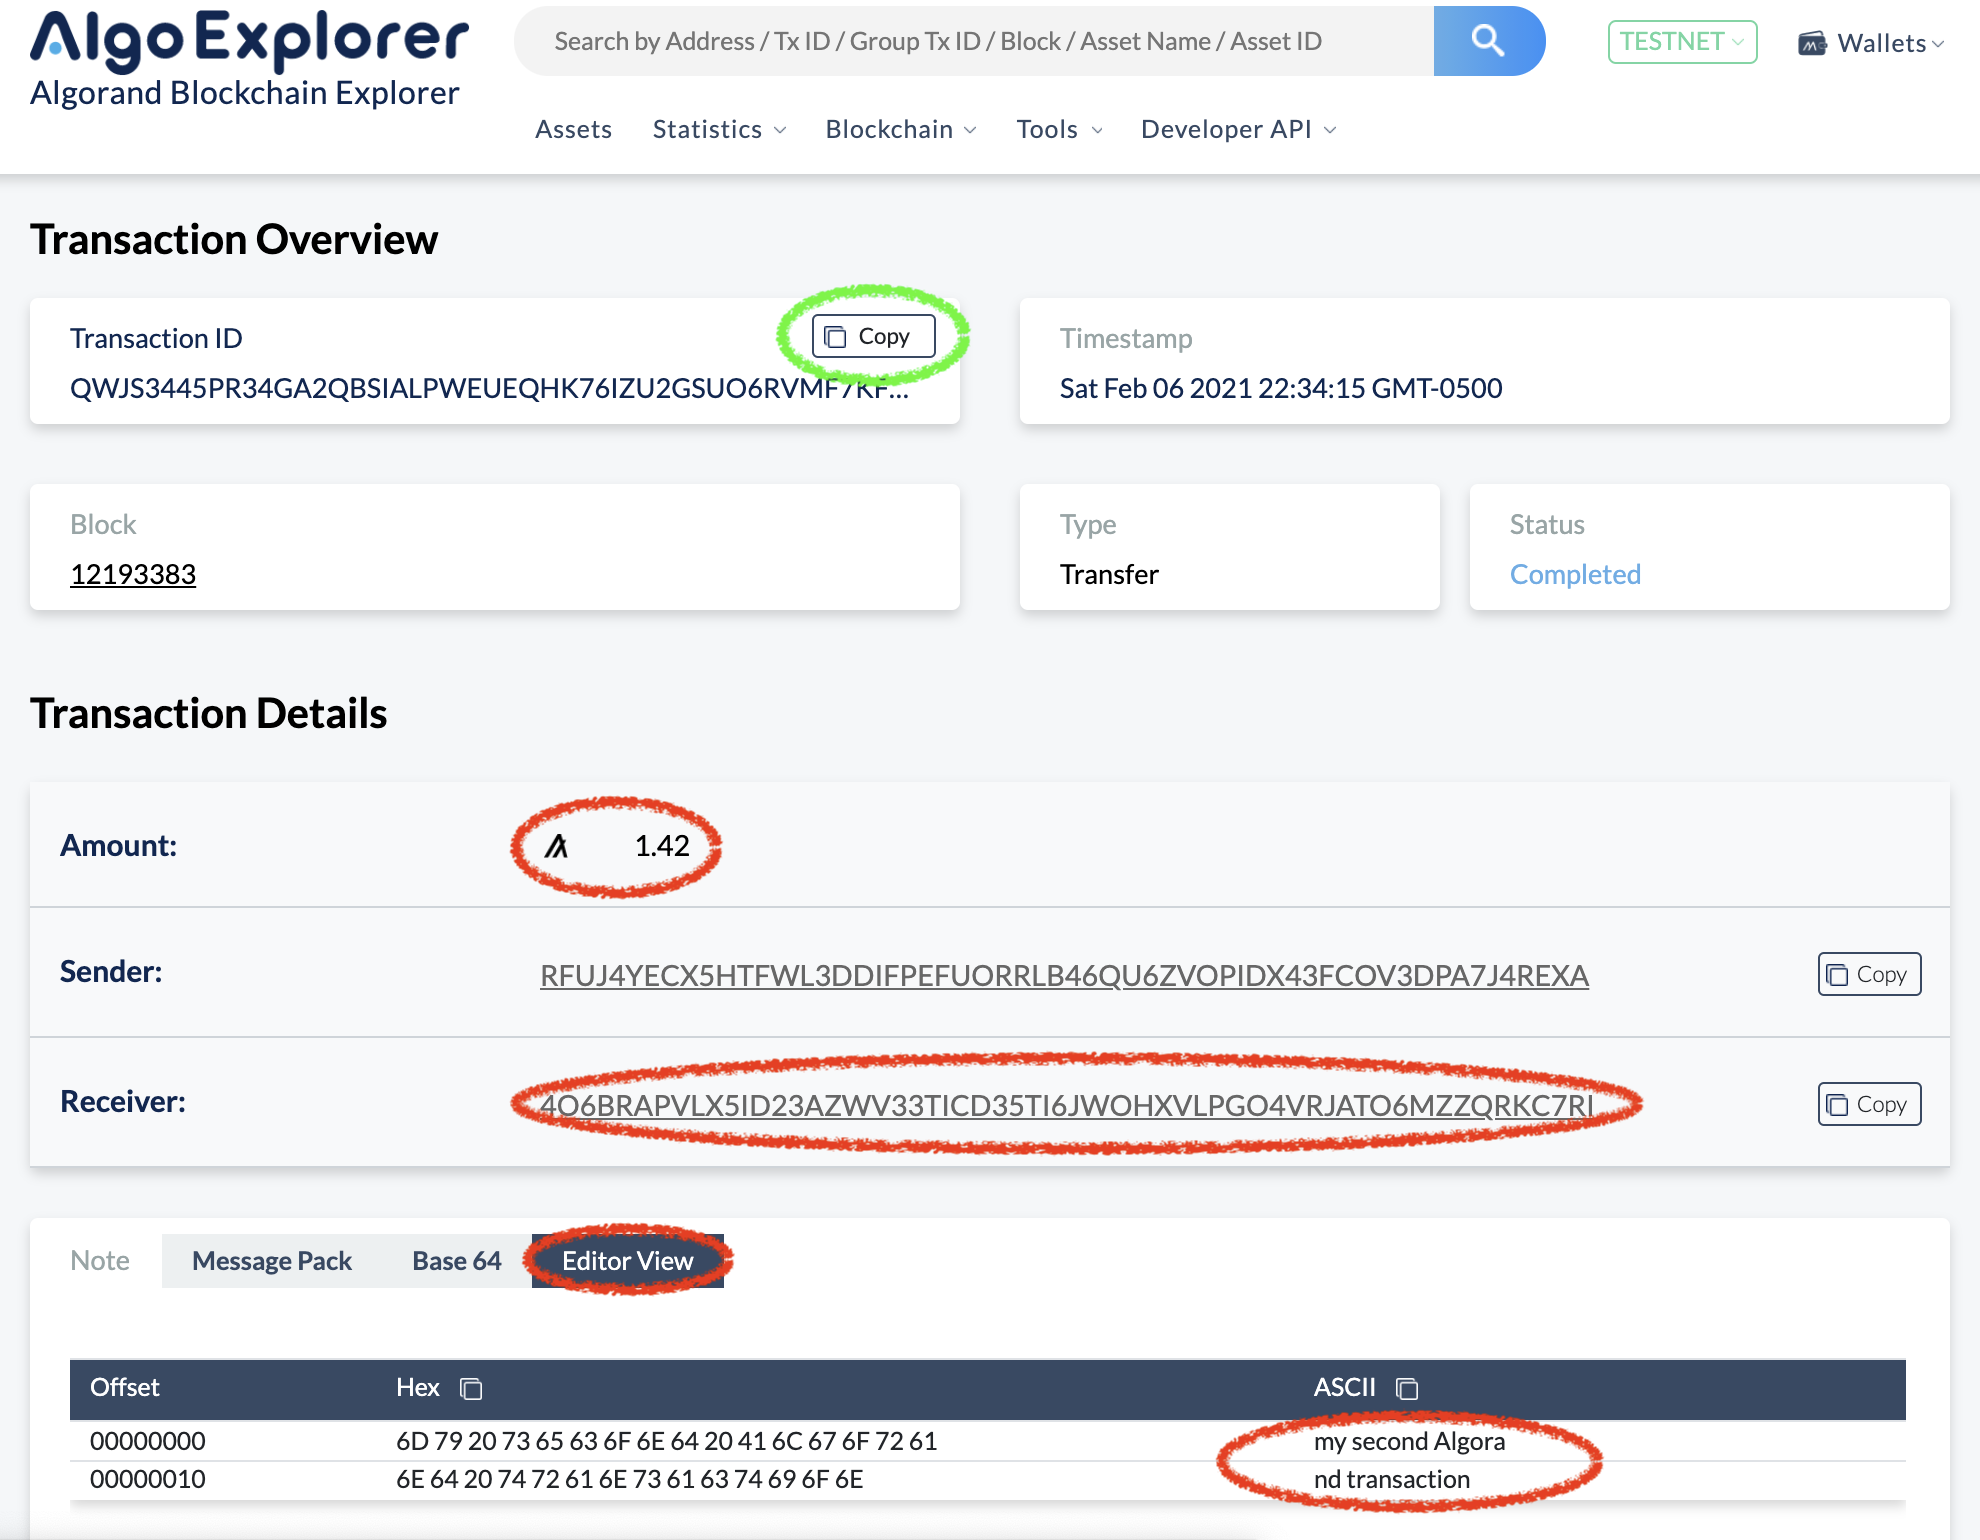 Screenshot of second transaction on AlgoExplorer